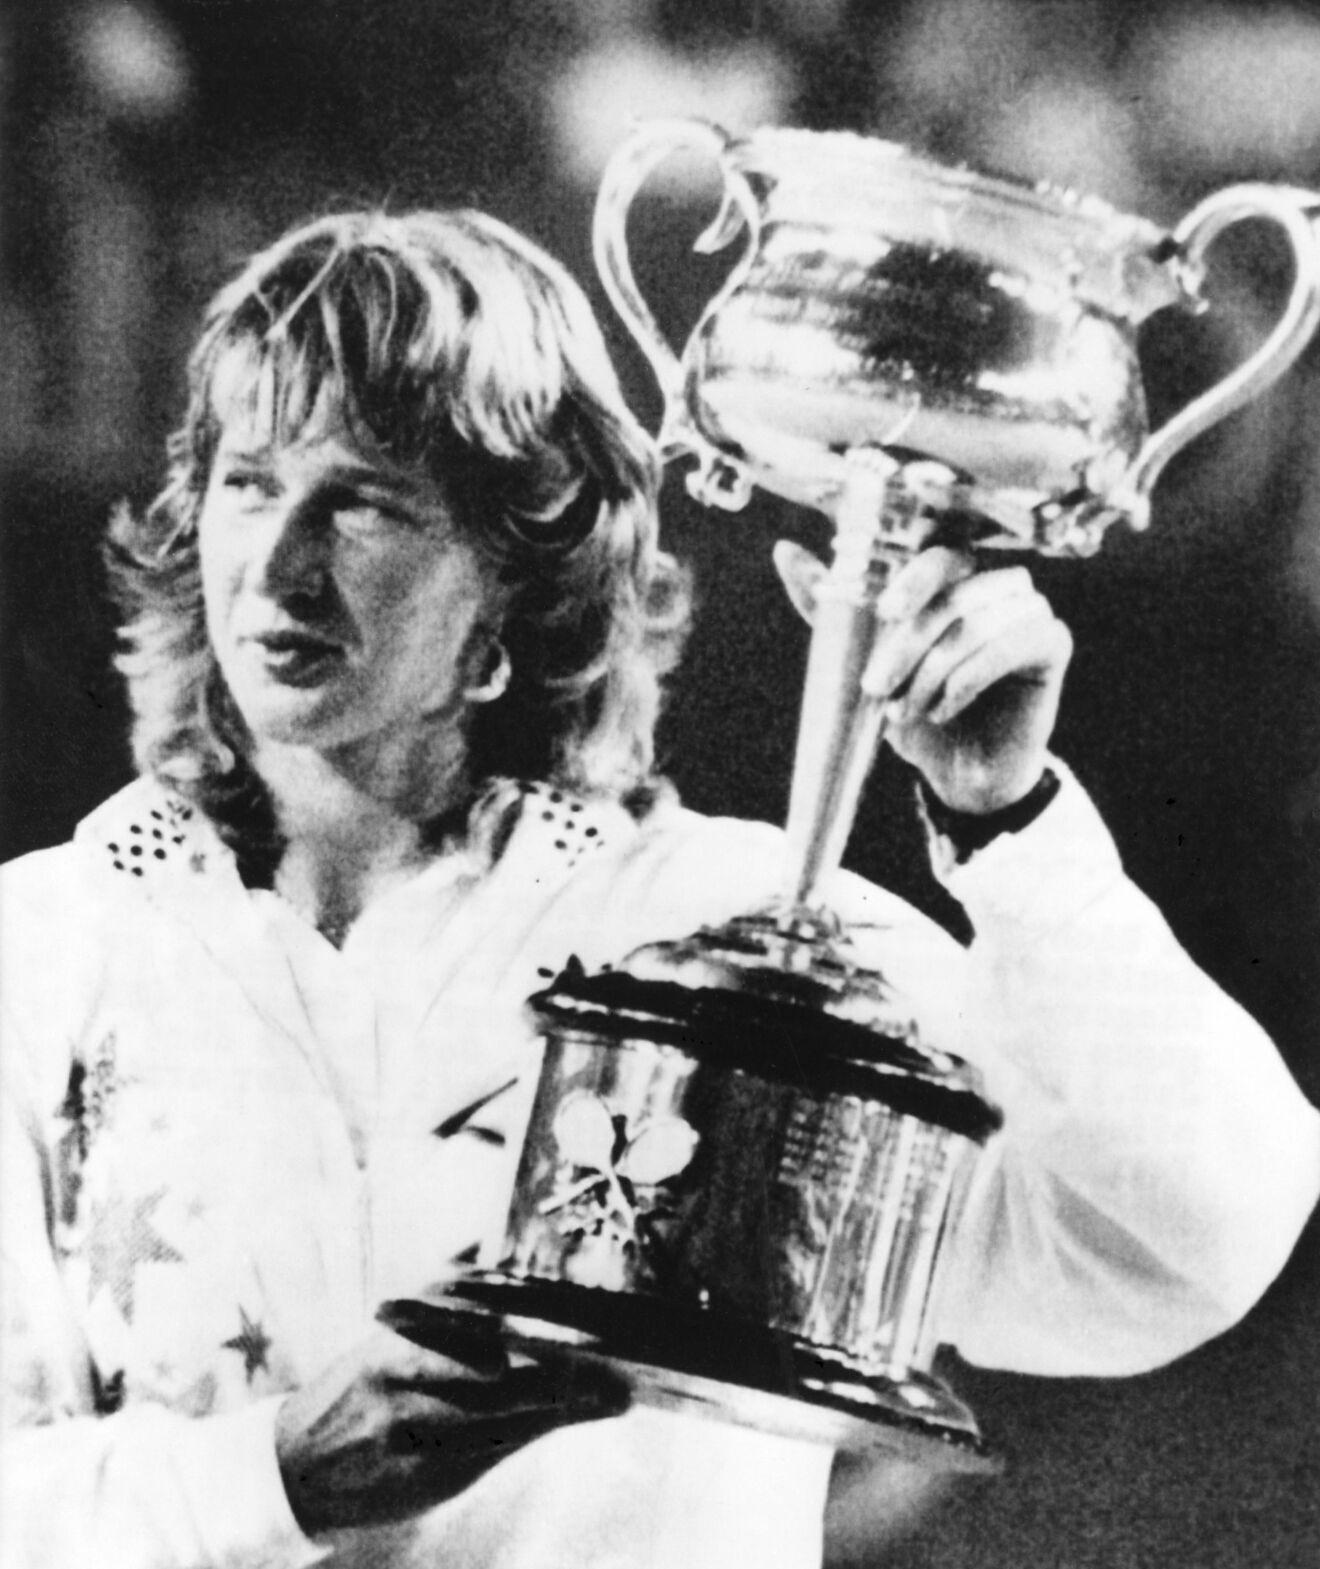 1988: Steffi Graf wins Australian Open with victory over Chris Evert